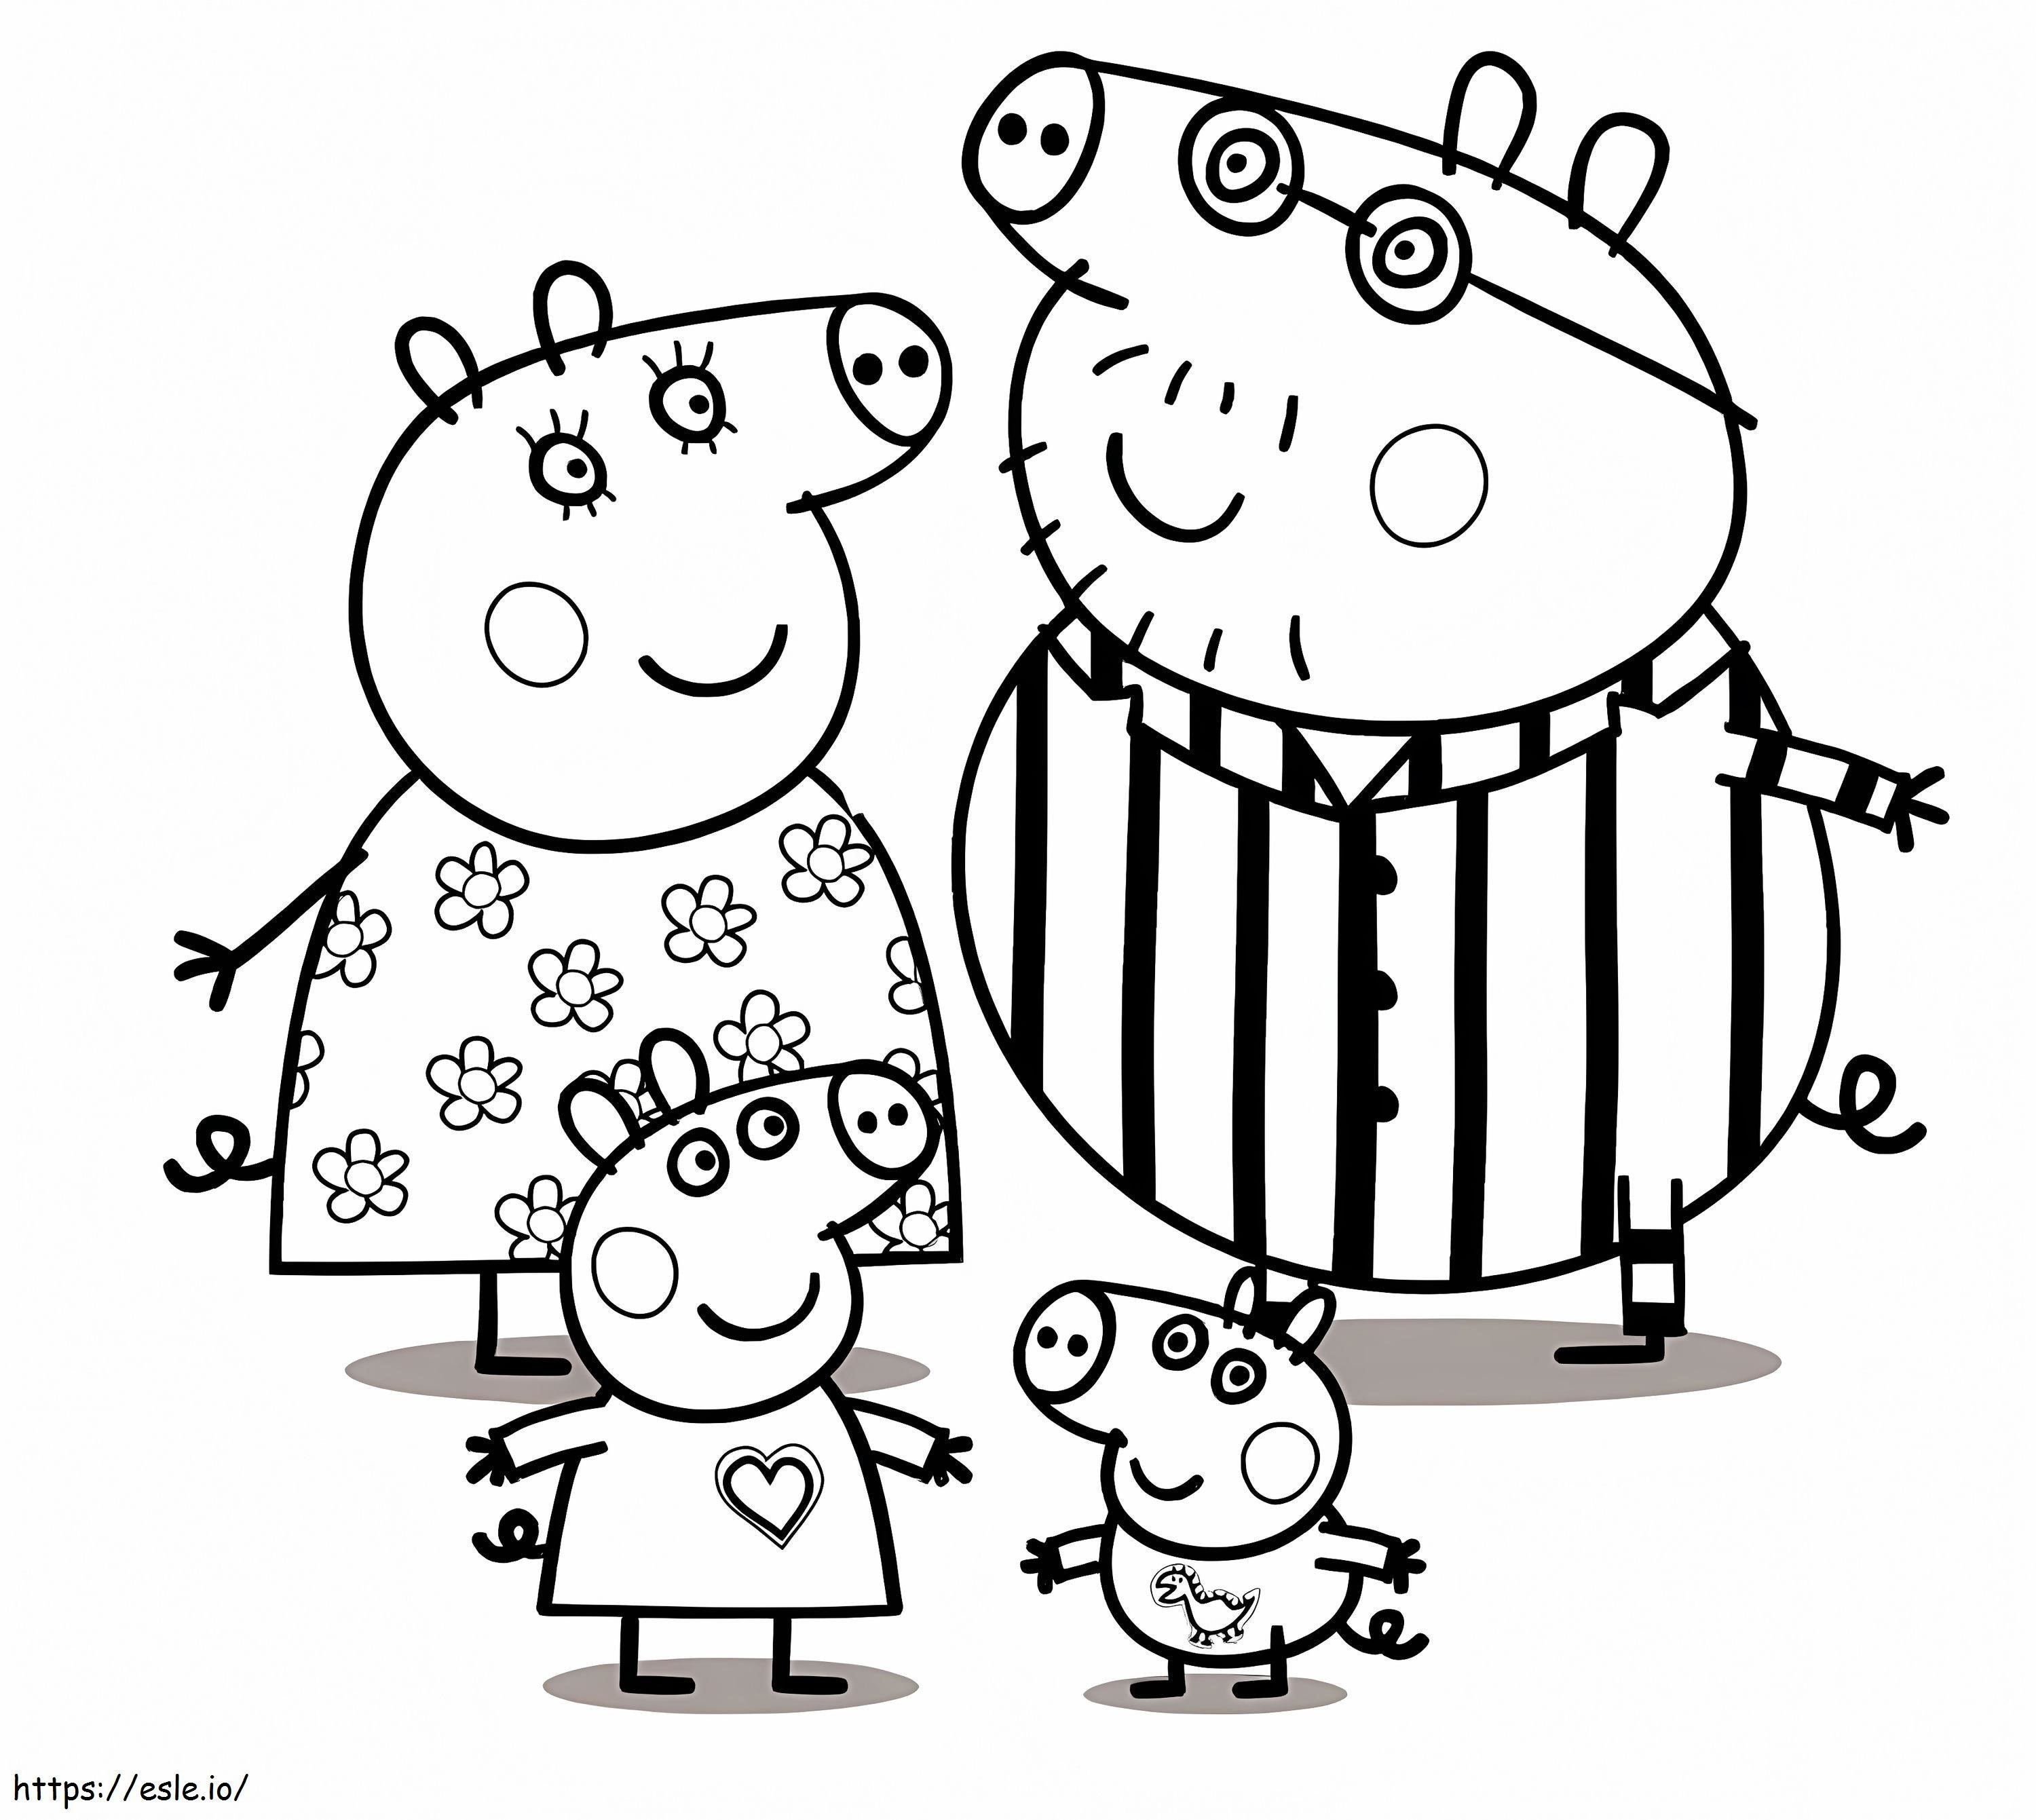 Peppa Pig-Familie im Pyjama ausmalbilder